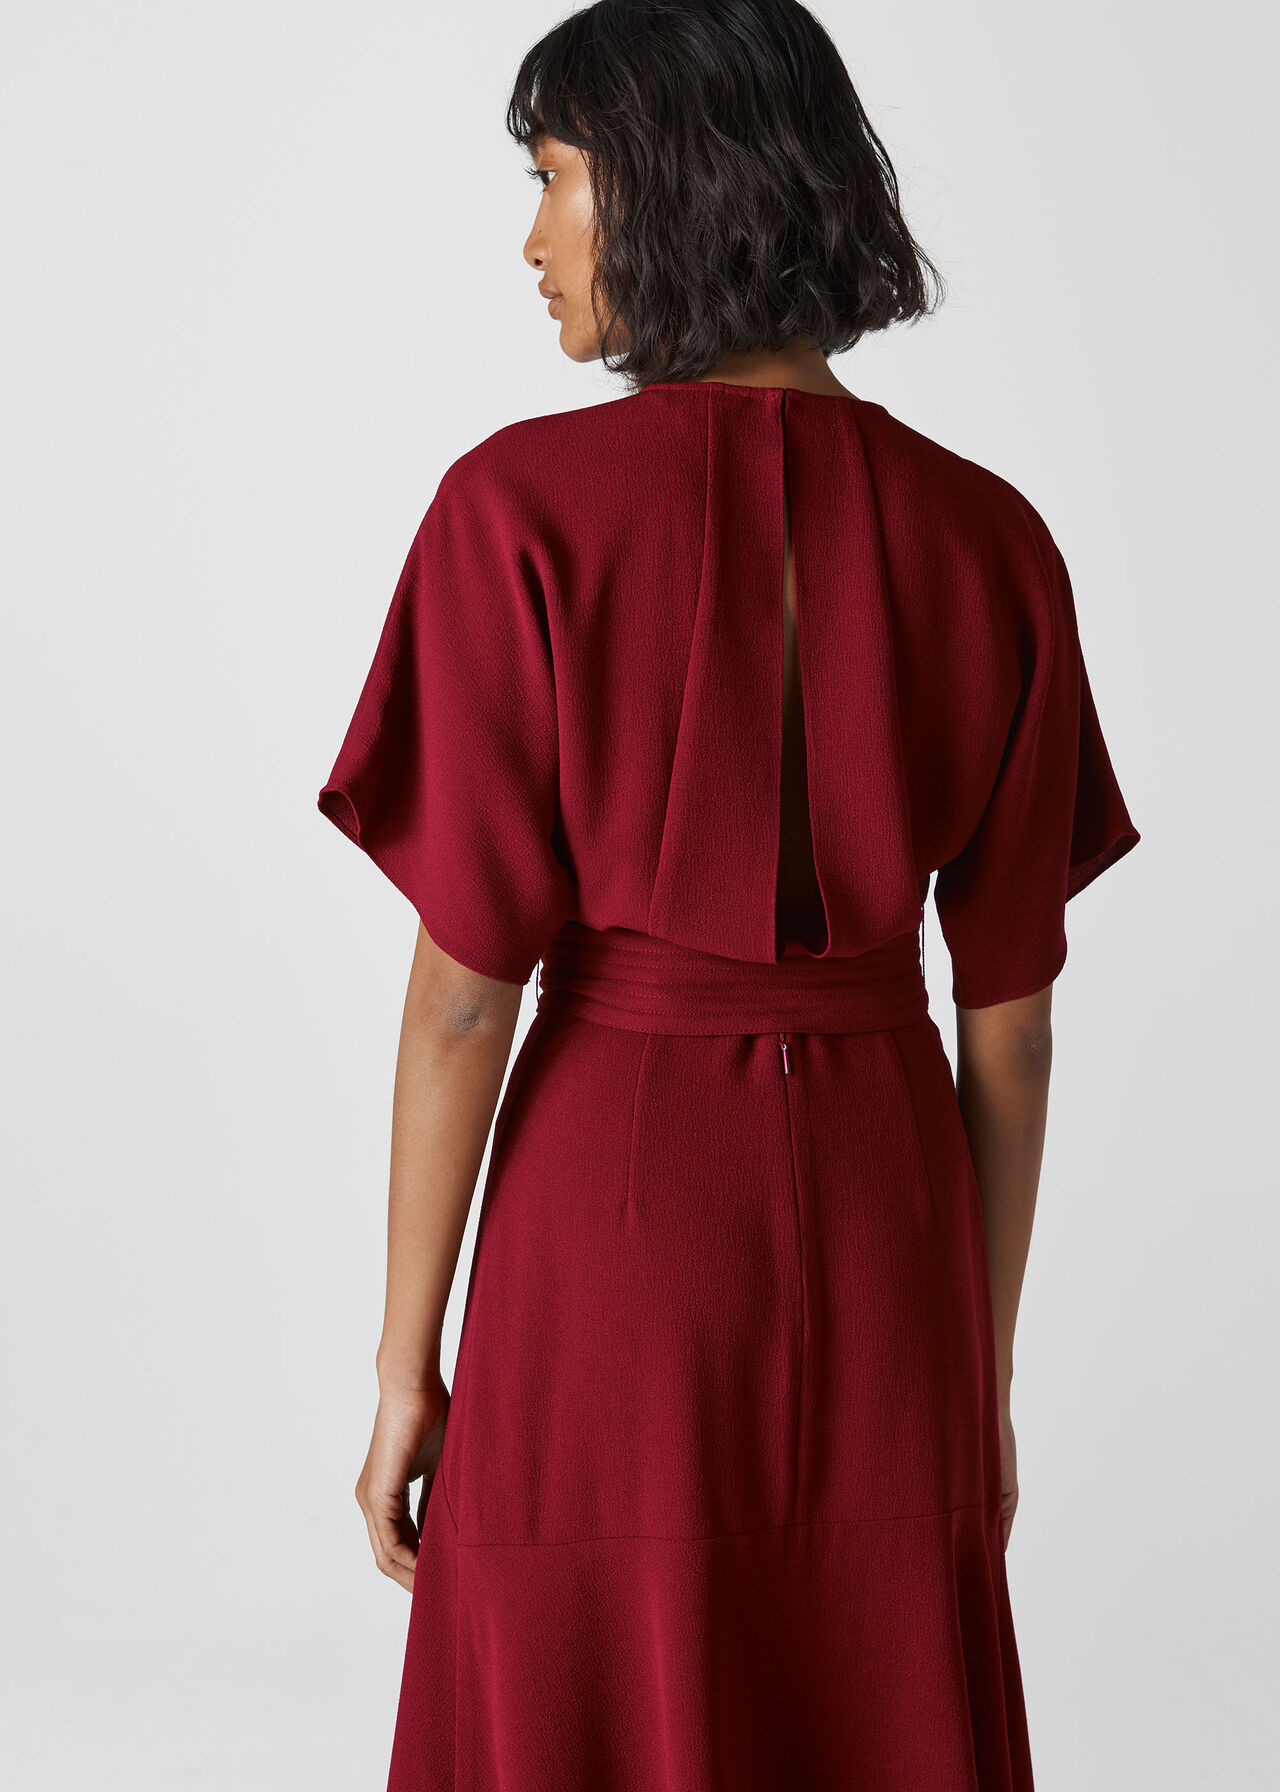 Burgundy Textured Belted Midi Dress | WHISTLES